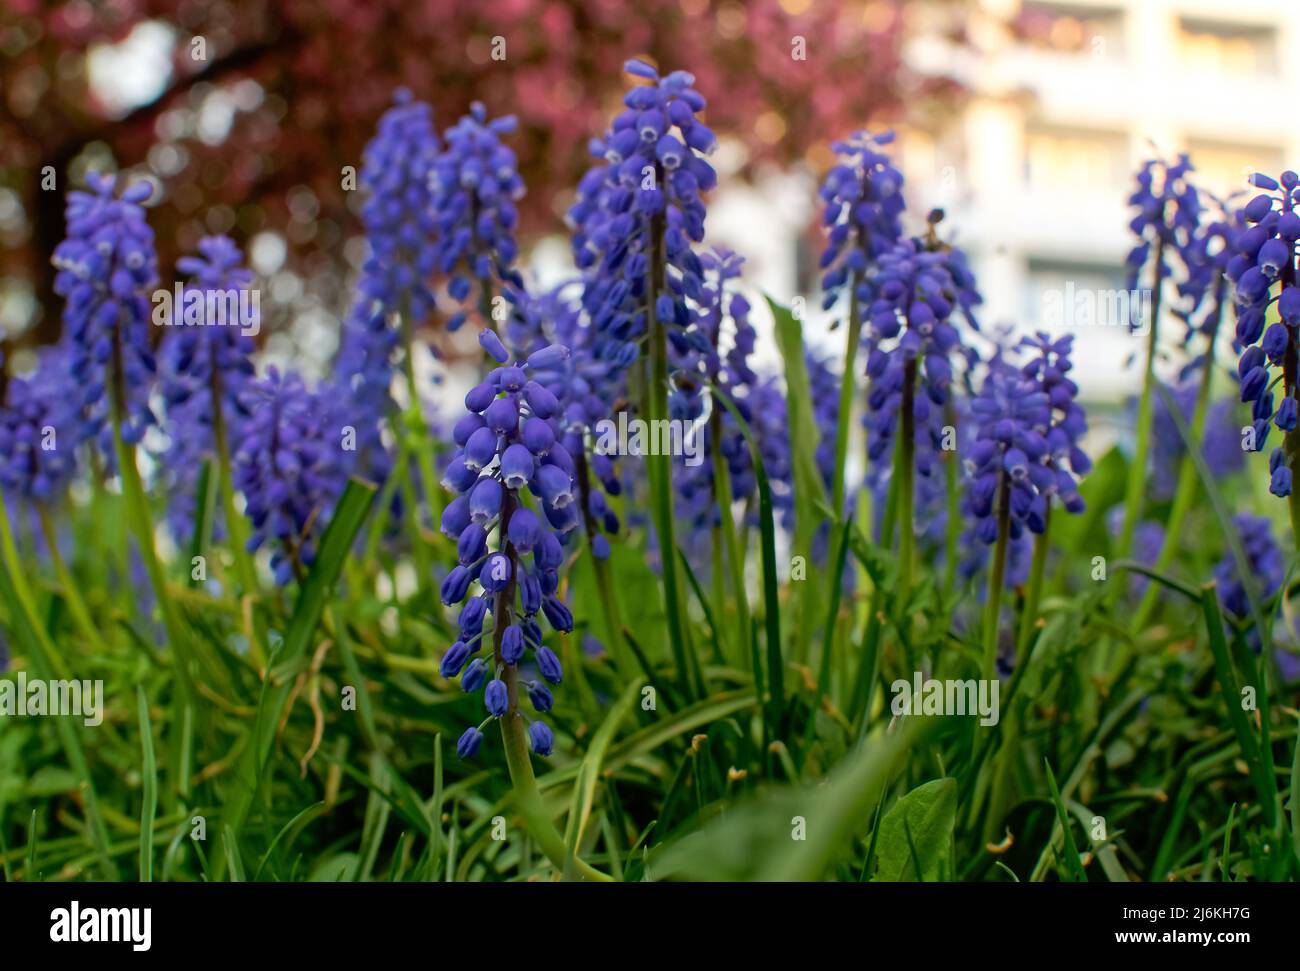 Armenian grape hyacinth, Muscari armeniacum, blue flowers in dense clusters at close range Stock Photo